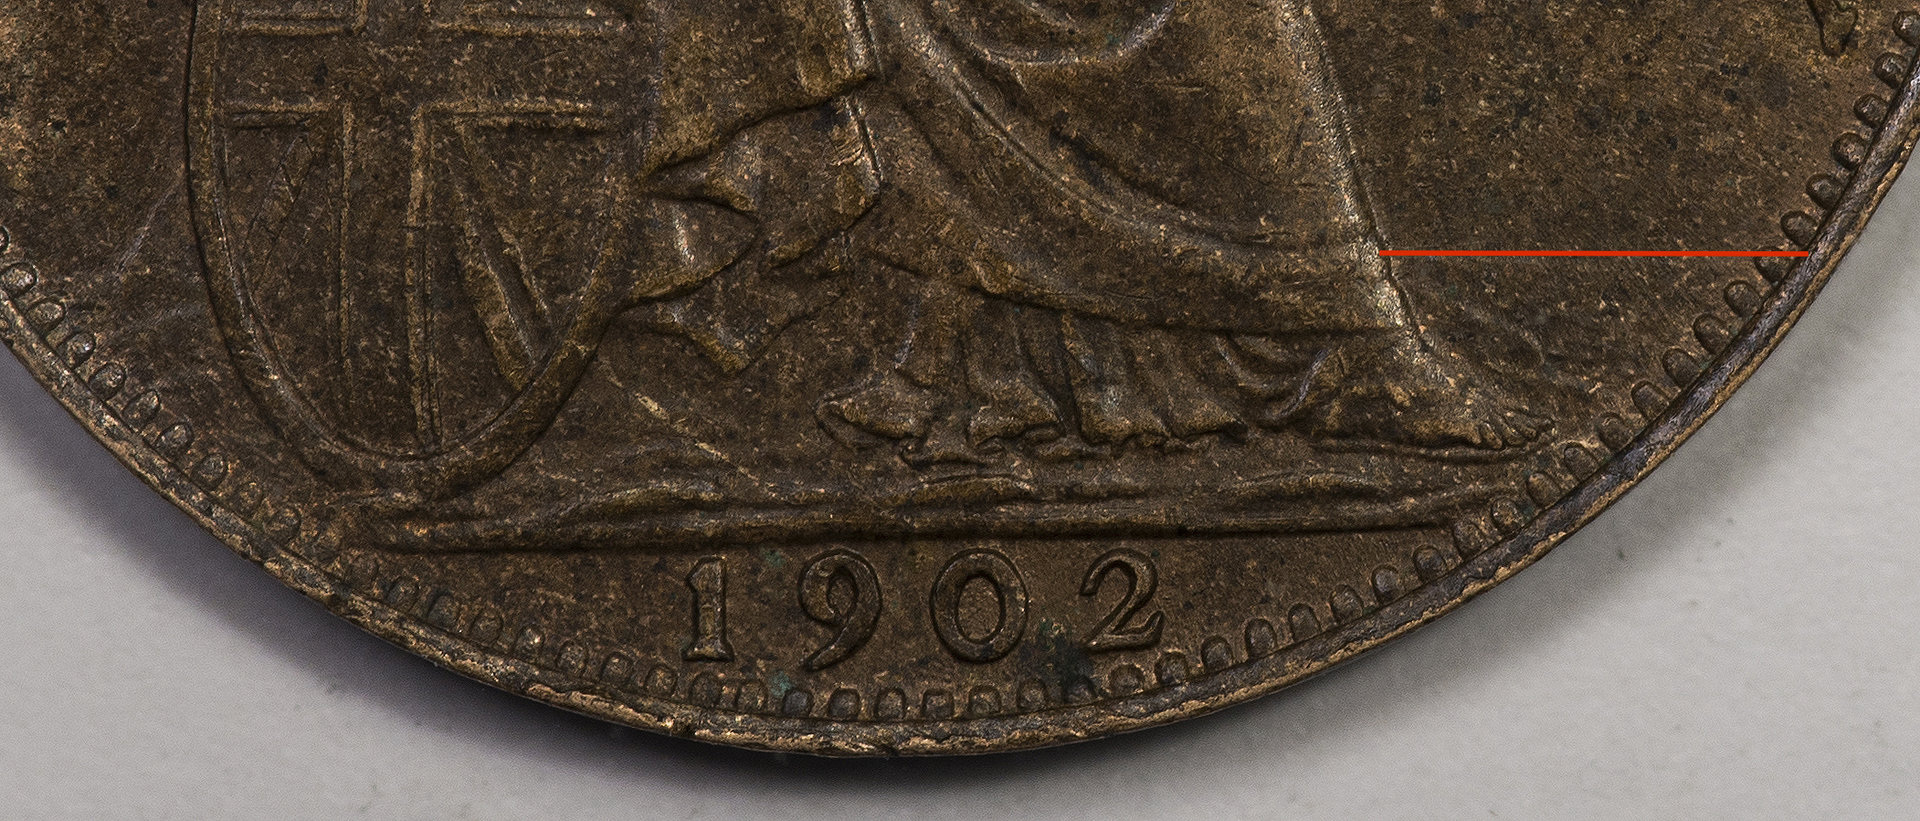 Great Britain - 1902 Half Penny LWL - LWL copy.jpg